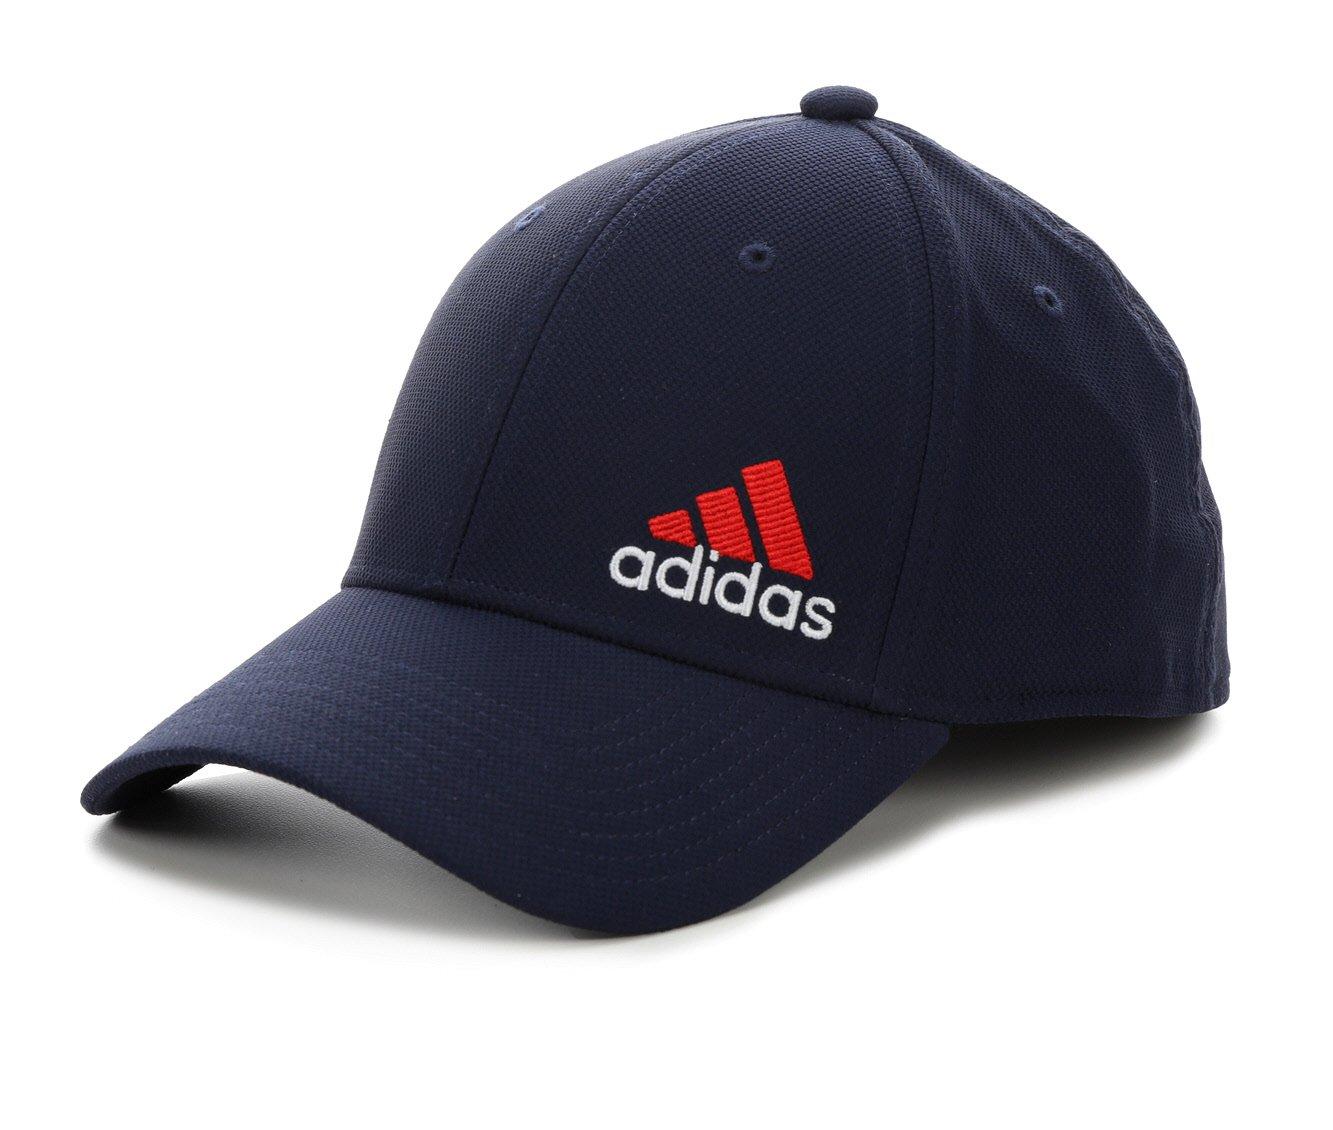 Adidas Men's Release Stretch Fit III Cap